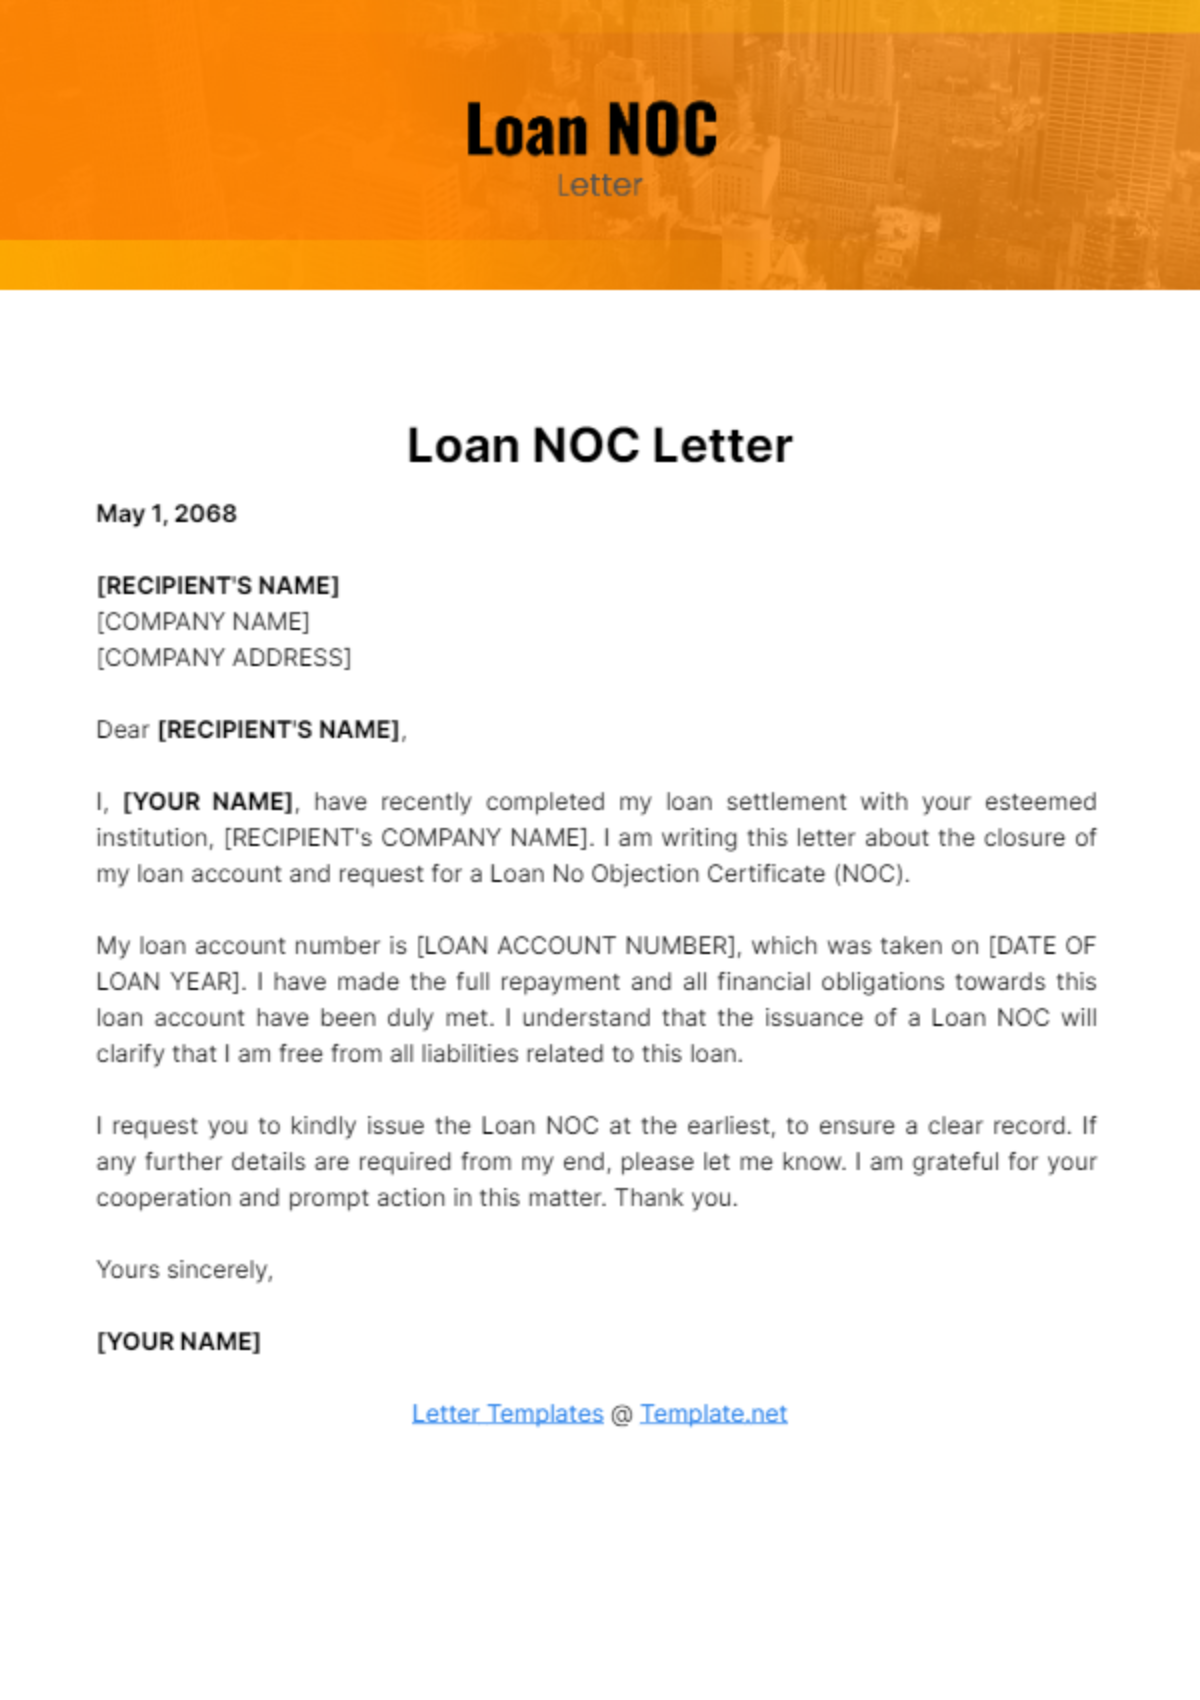 Free Loan NOC Letter Template